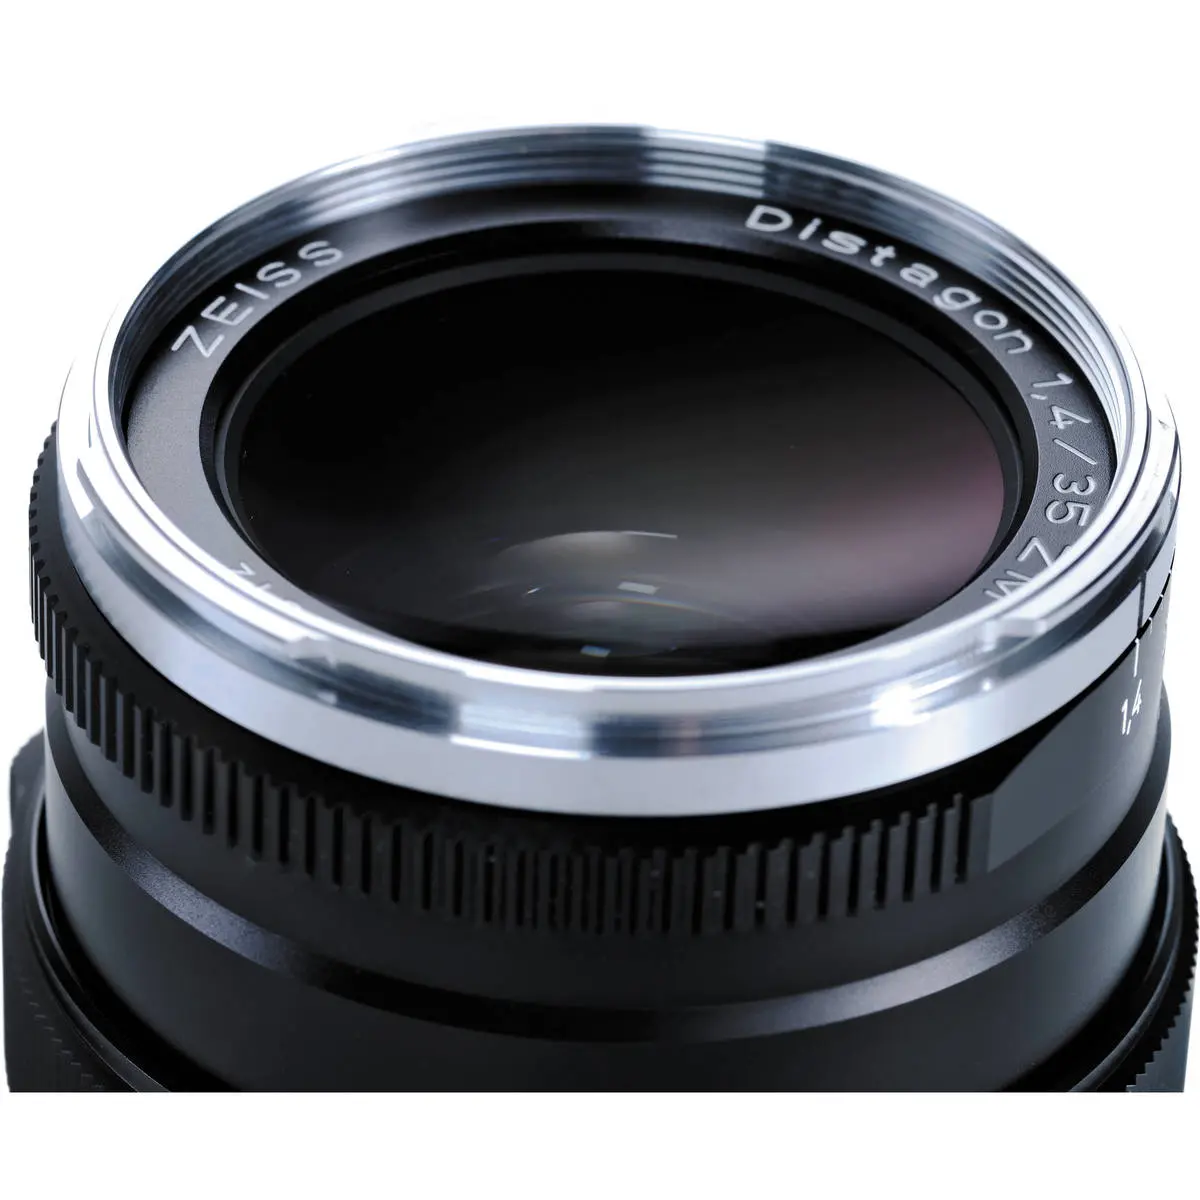 2. Carl Zeiss Distagon T* 35mm f/1.4 ZM Lens (Black) Lens